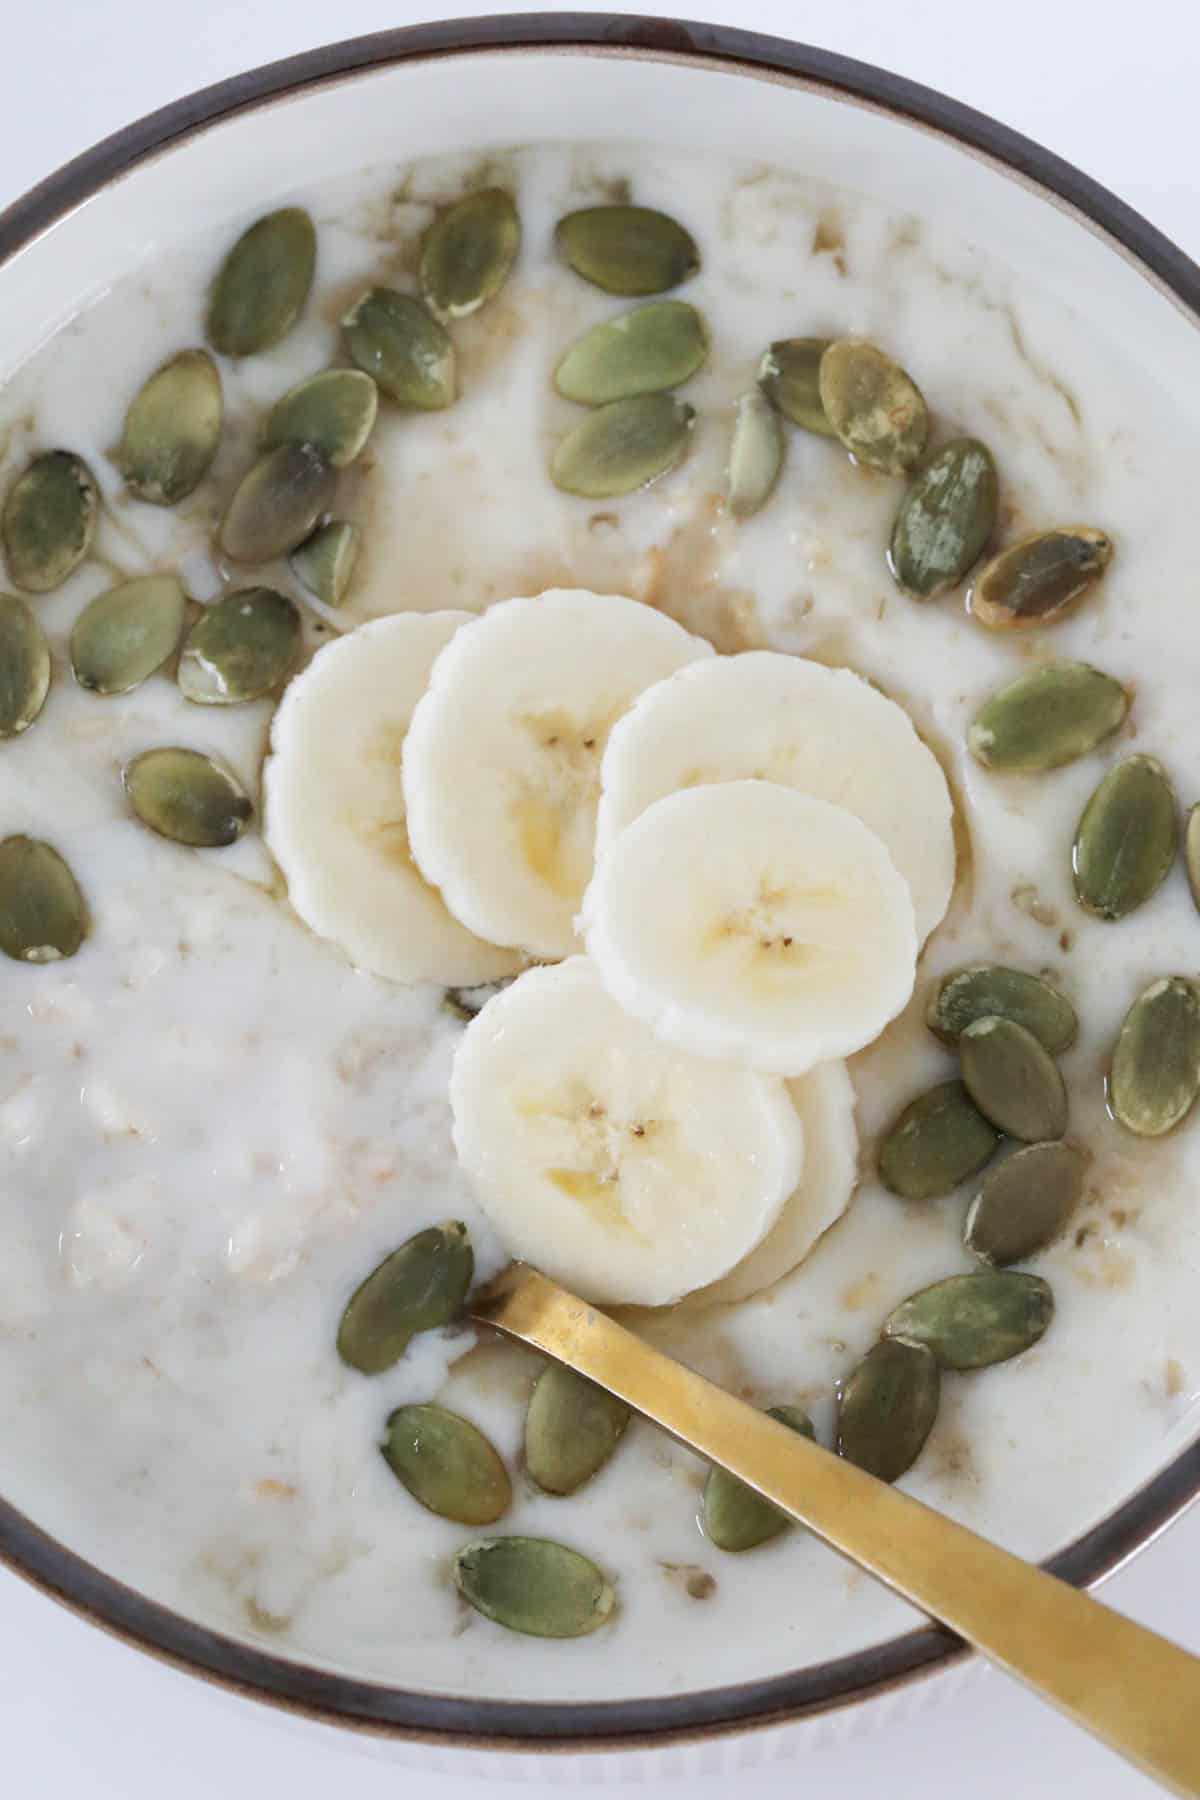 Banana and seeds on top of porridge.